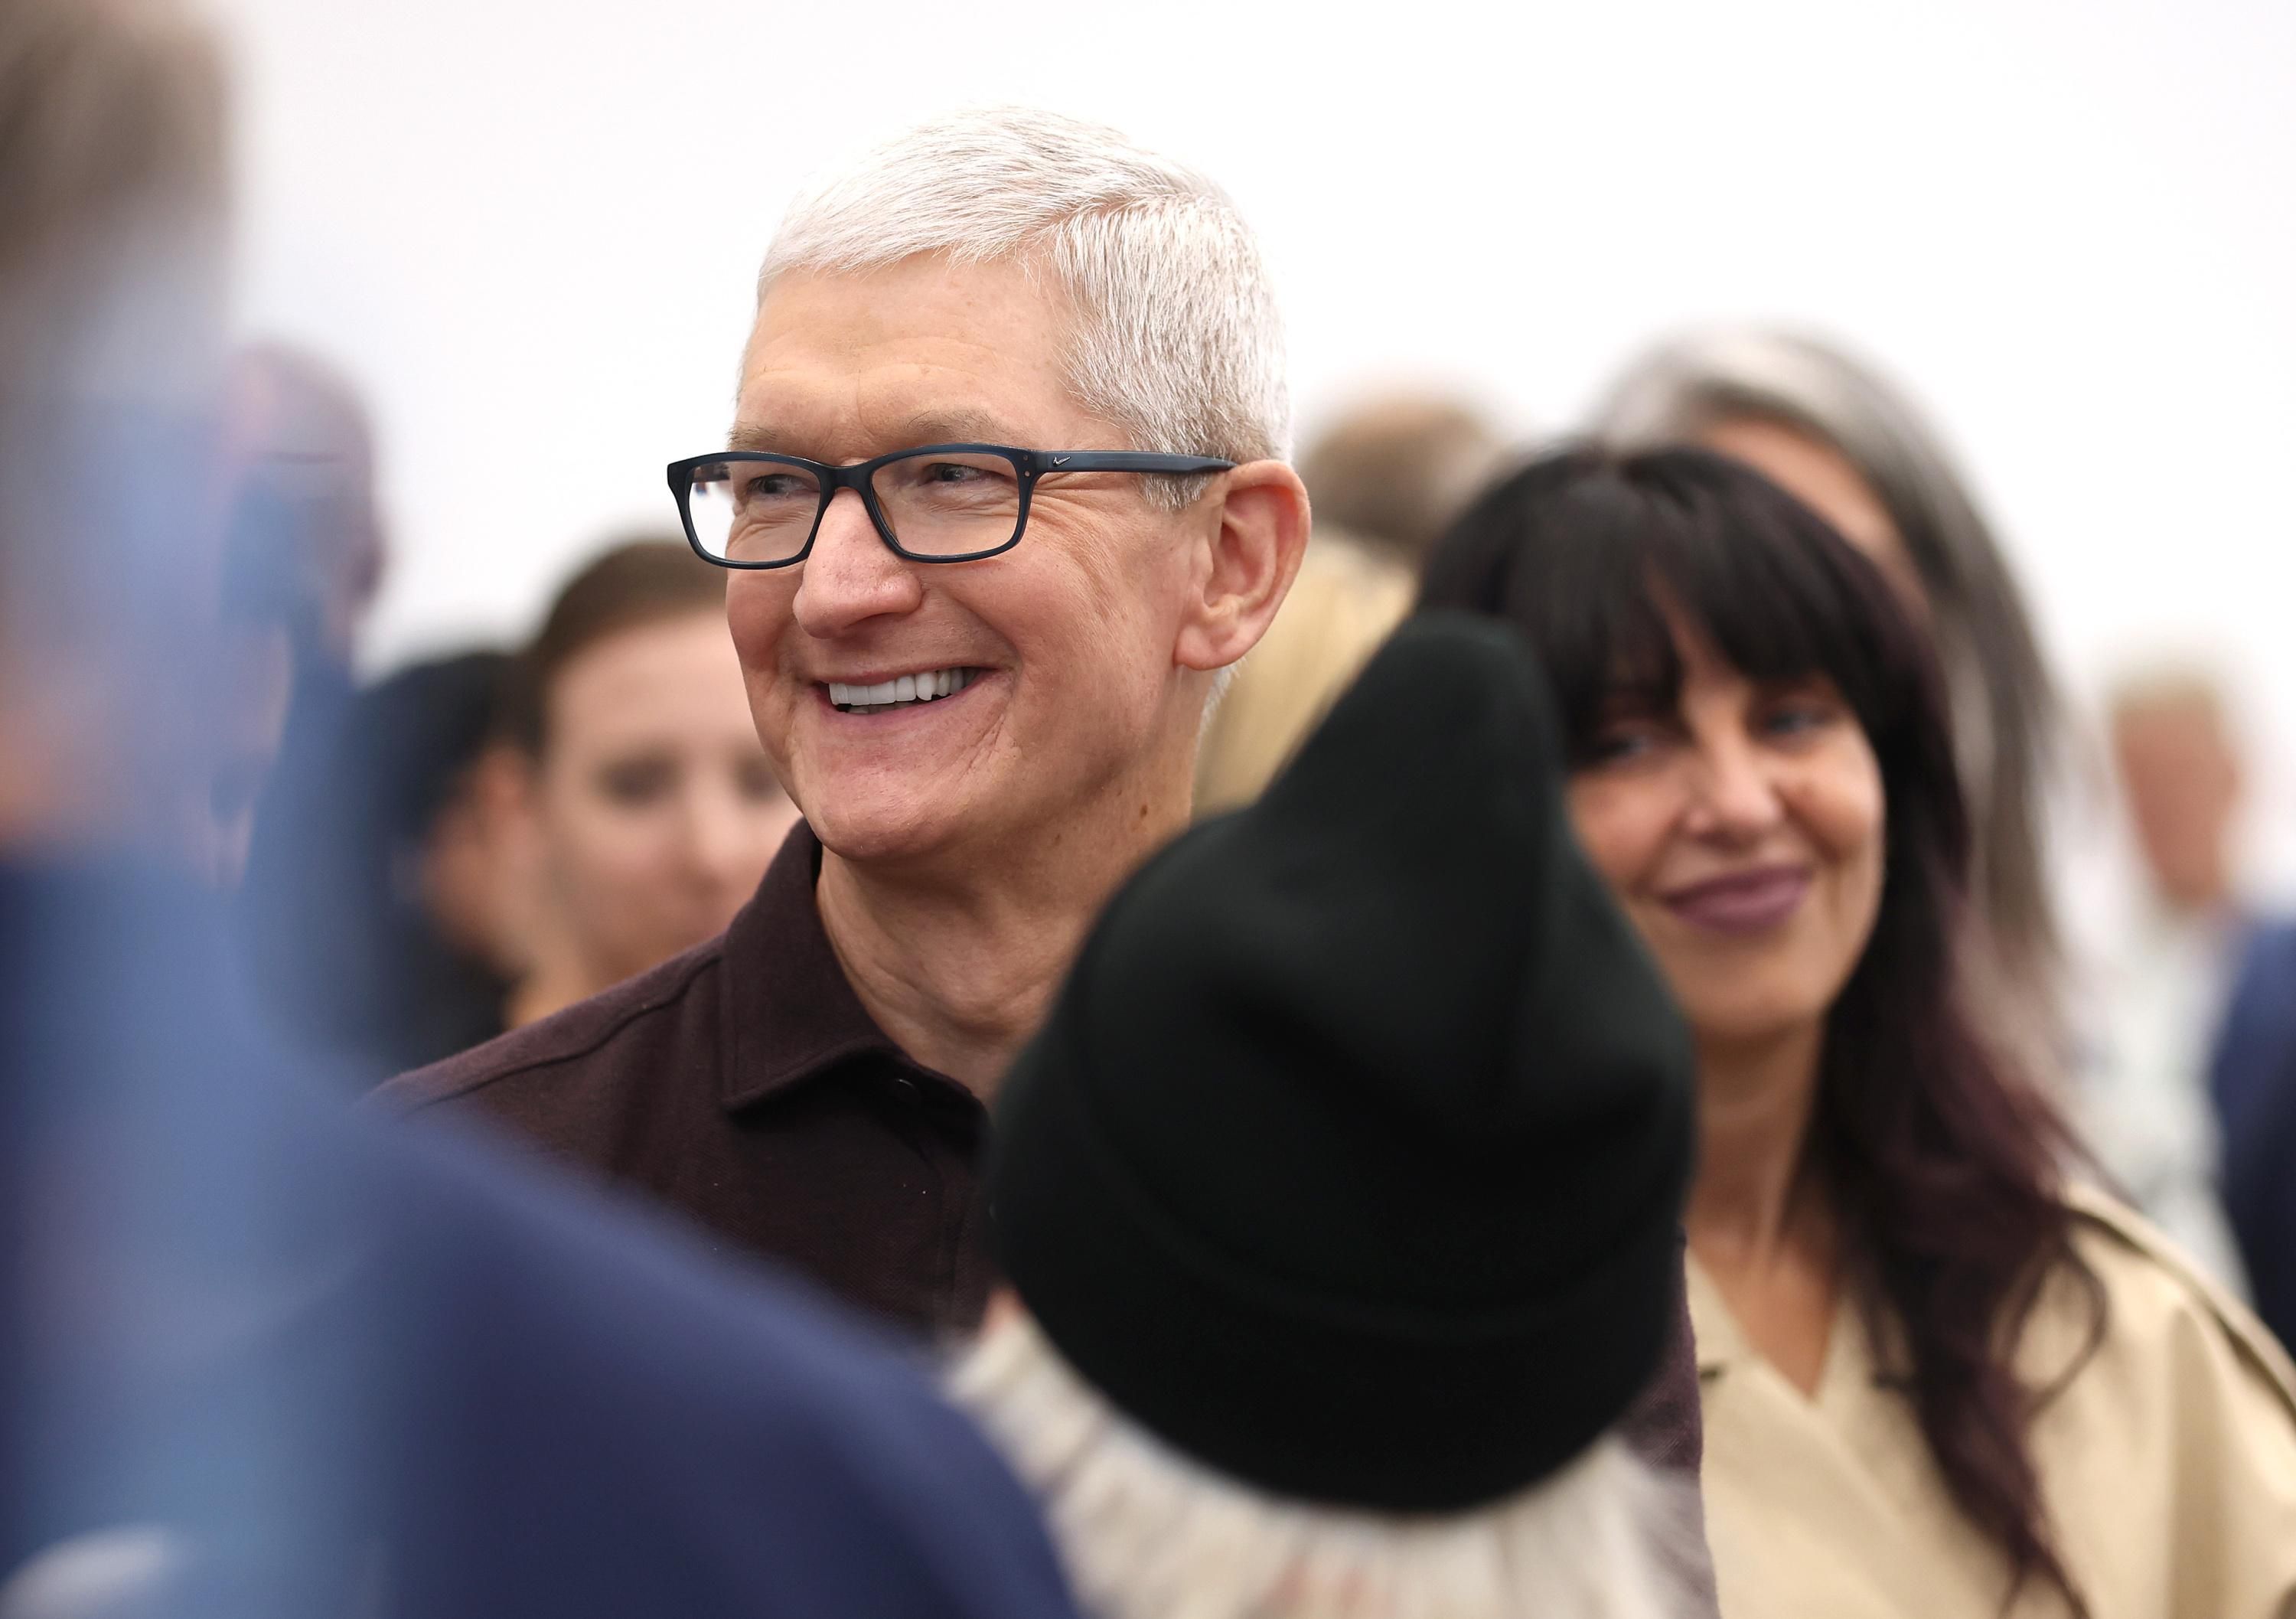 Apple CEO Tim Cook walks through a crowd during an event